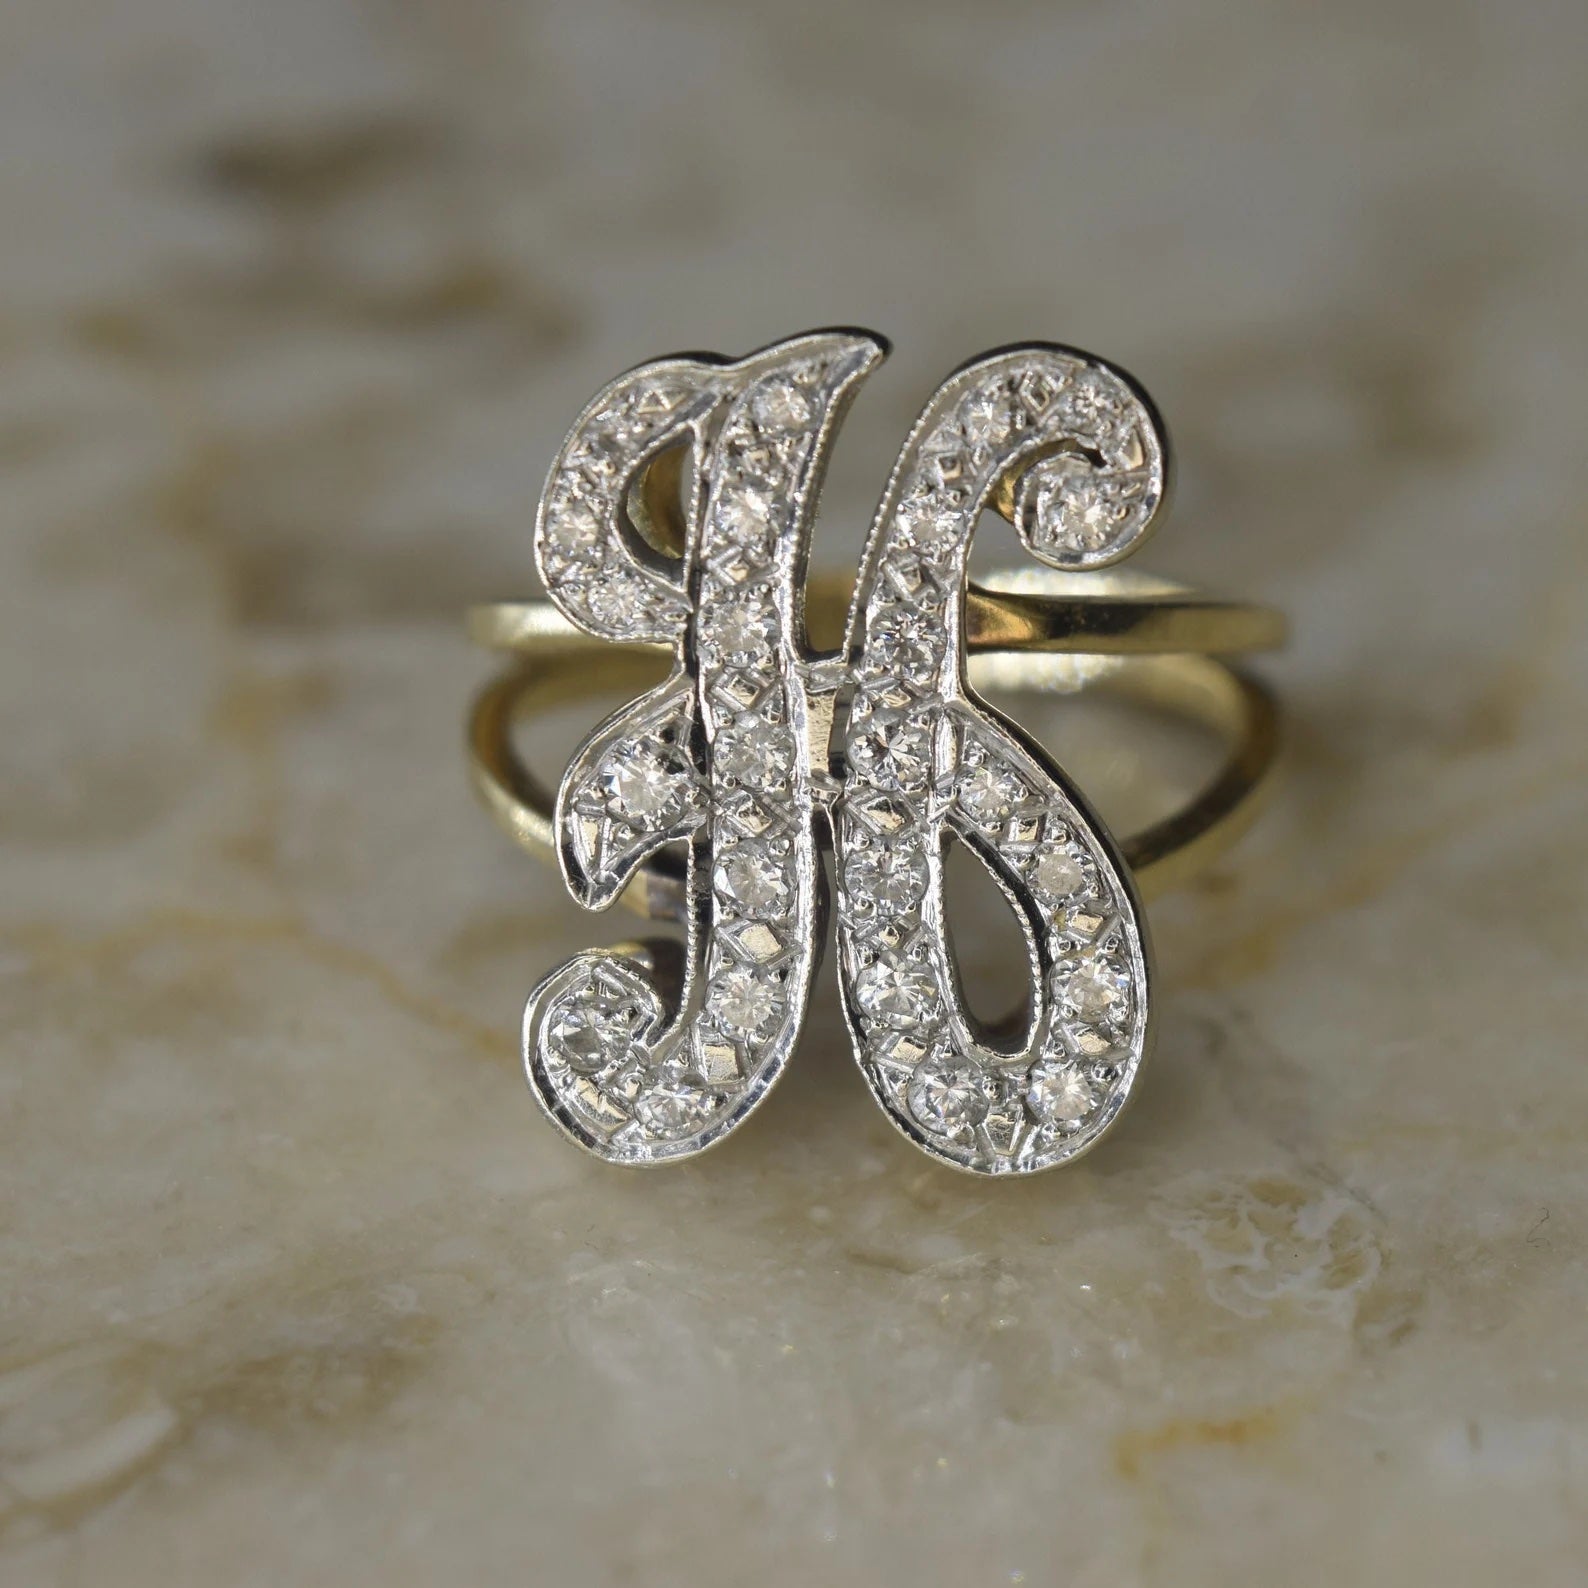 Vintage 14k Gold and Diamond H Monogram Ring c.1960s